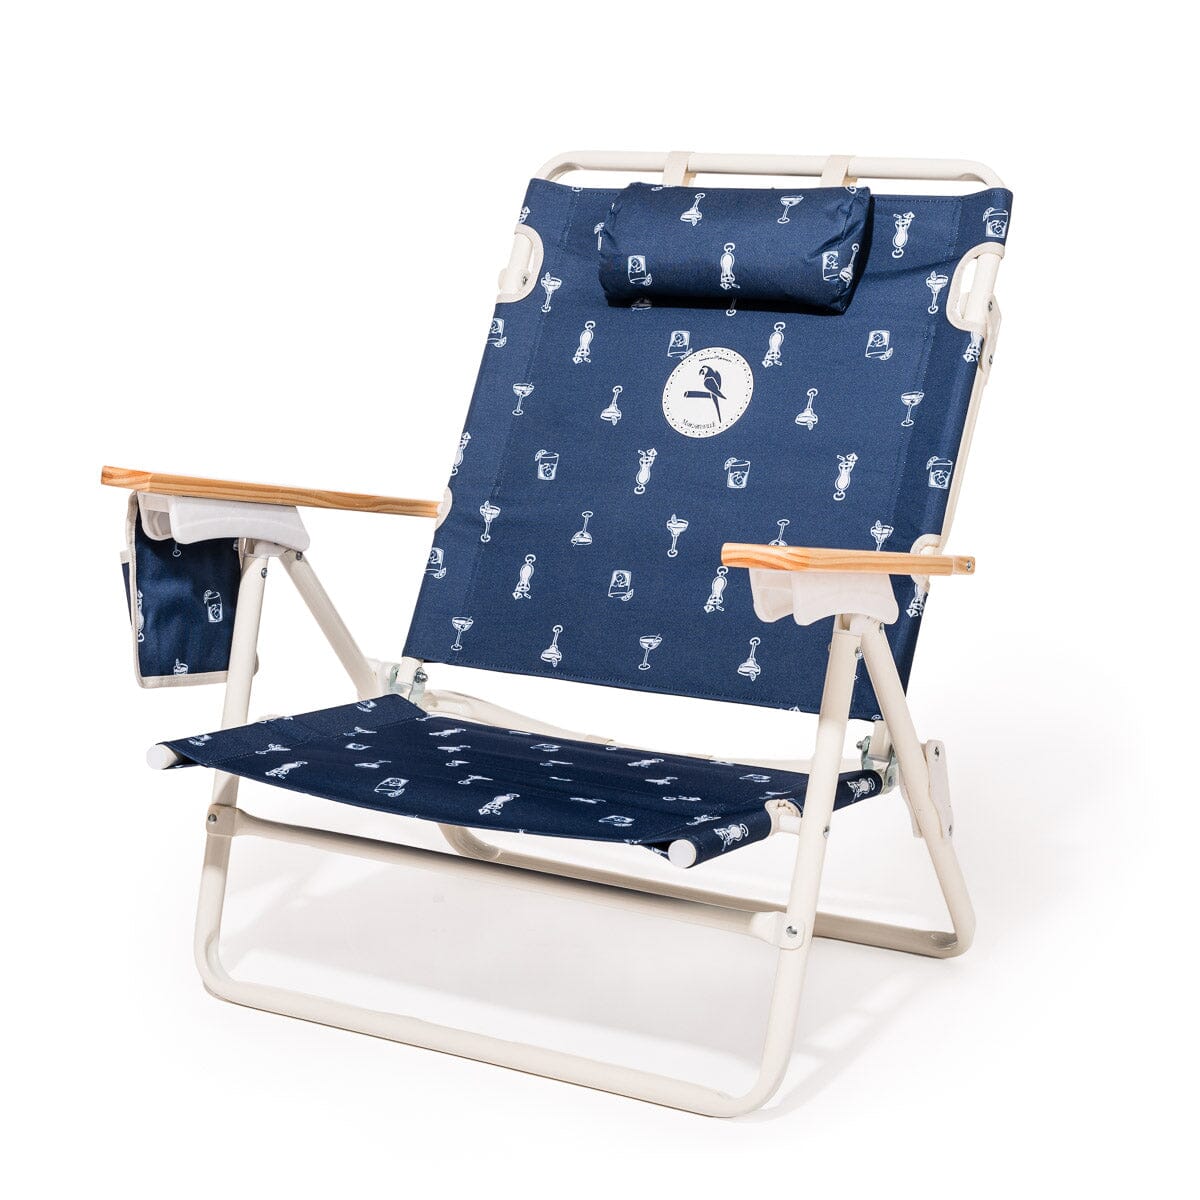 The Mañana Chair - Continental Drifter Marg Mañana Beach Chair Margaritaville by B&P Co. 